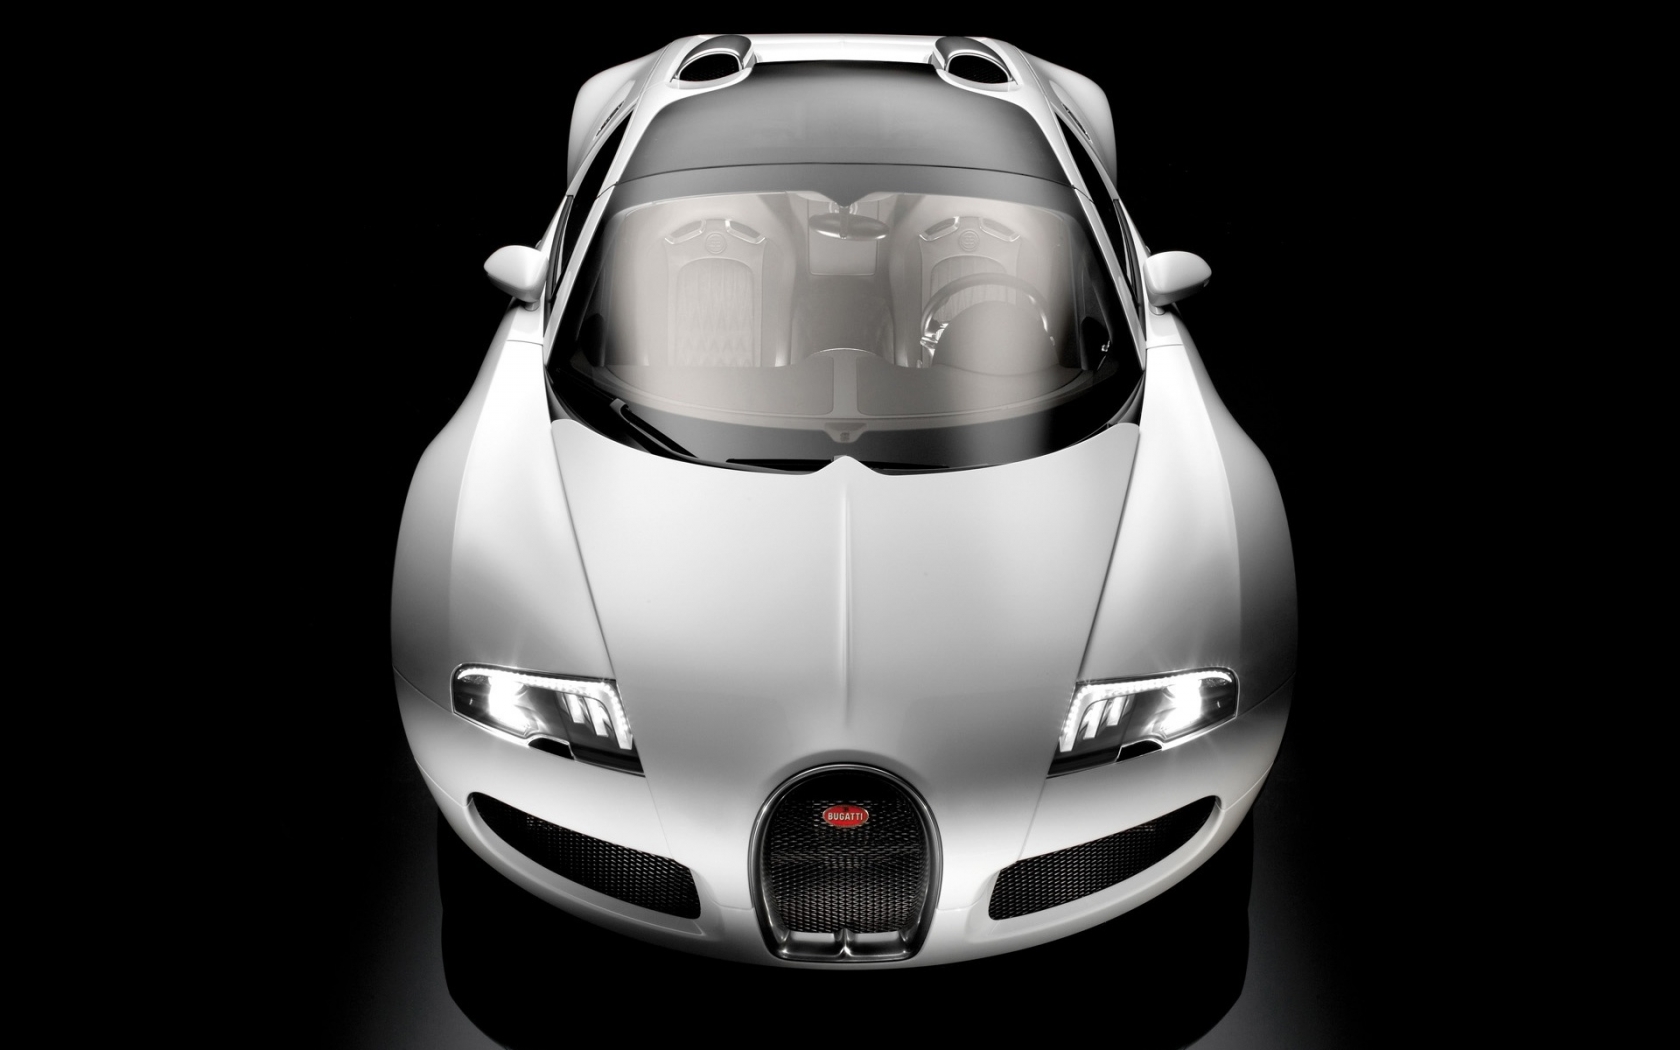 Bugatti Veyron 16.4 Grand Sport 2009 - Front Top Studio for 1680 x 1050 widescreen resolution